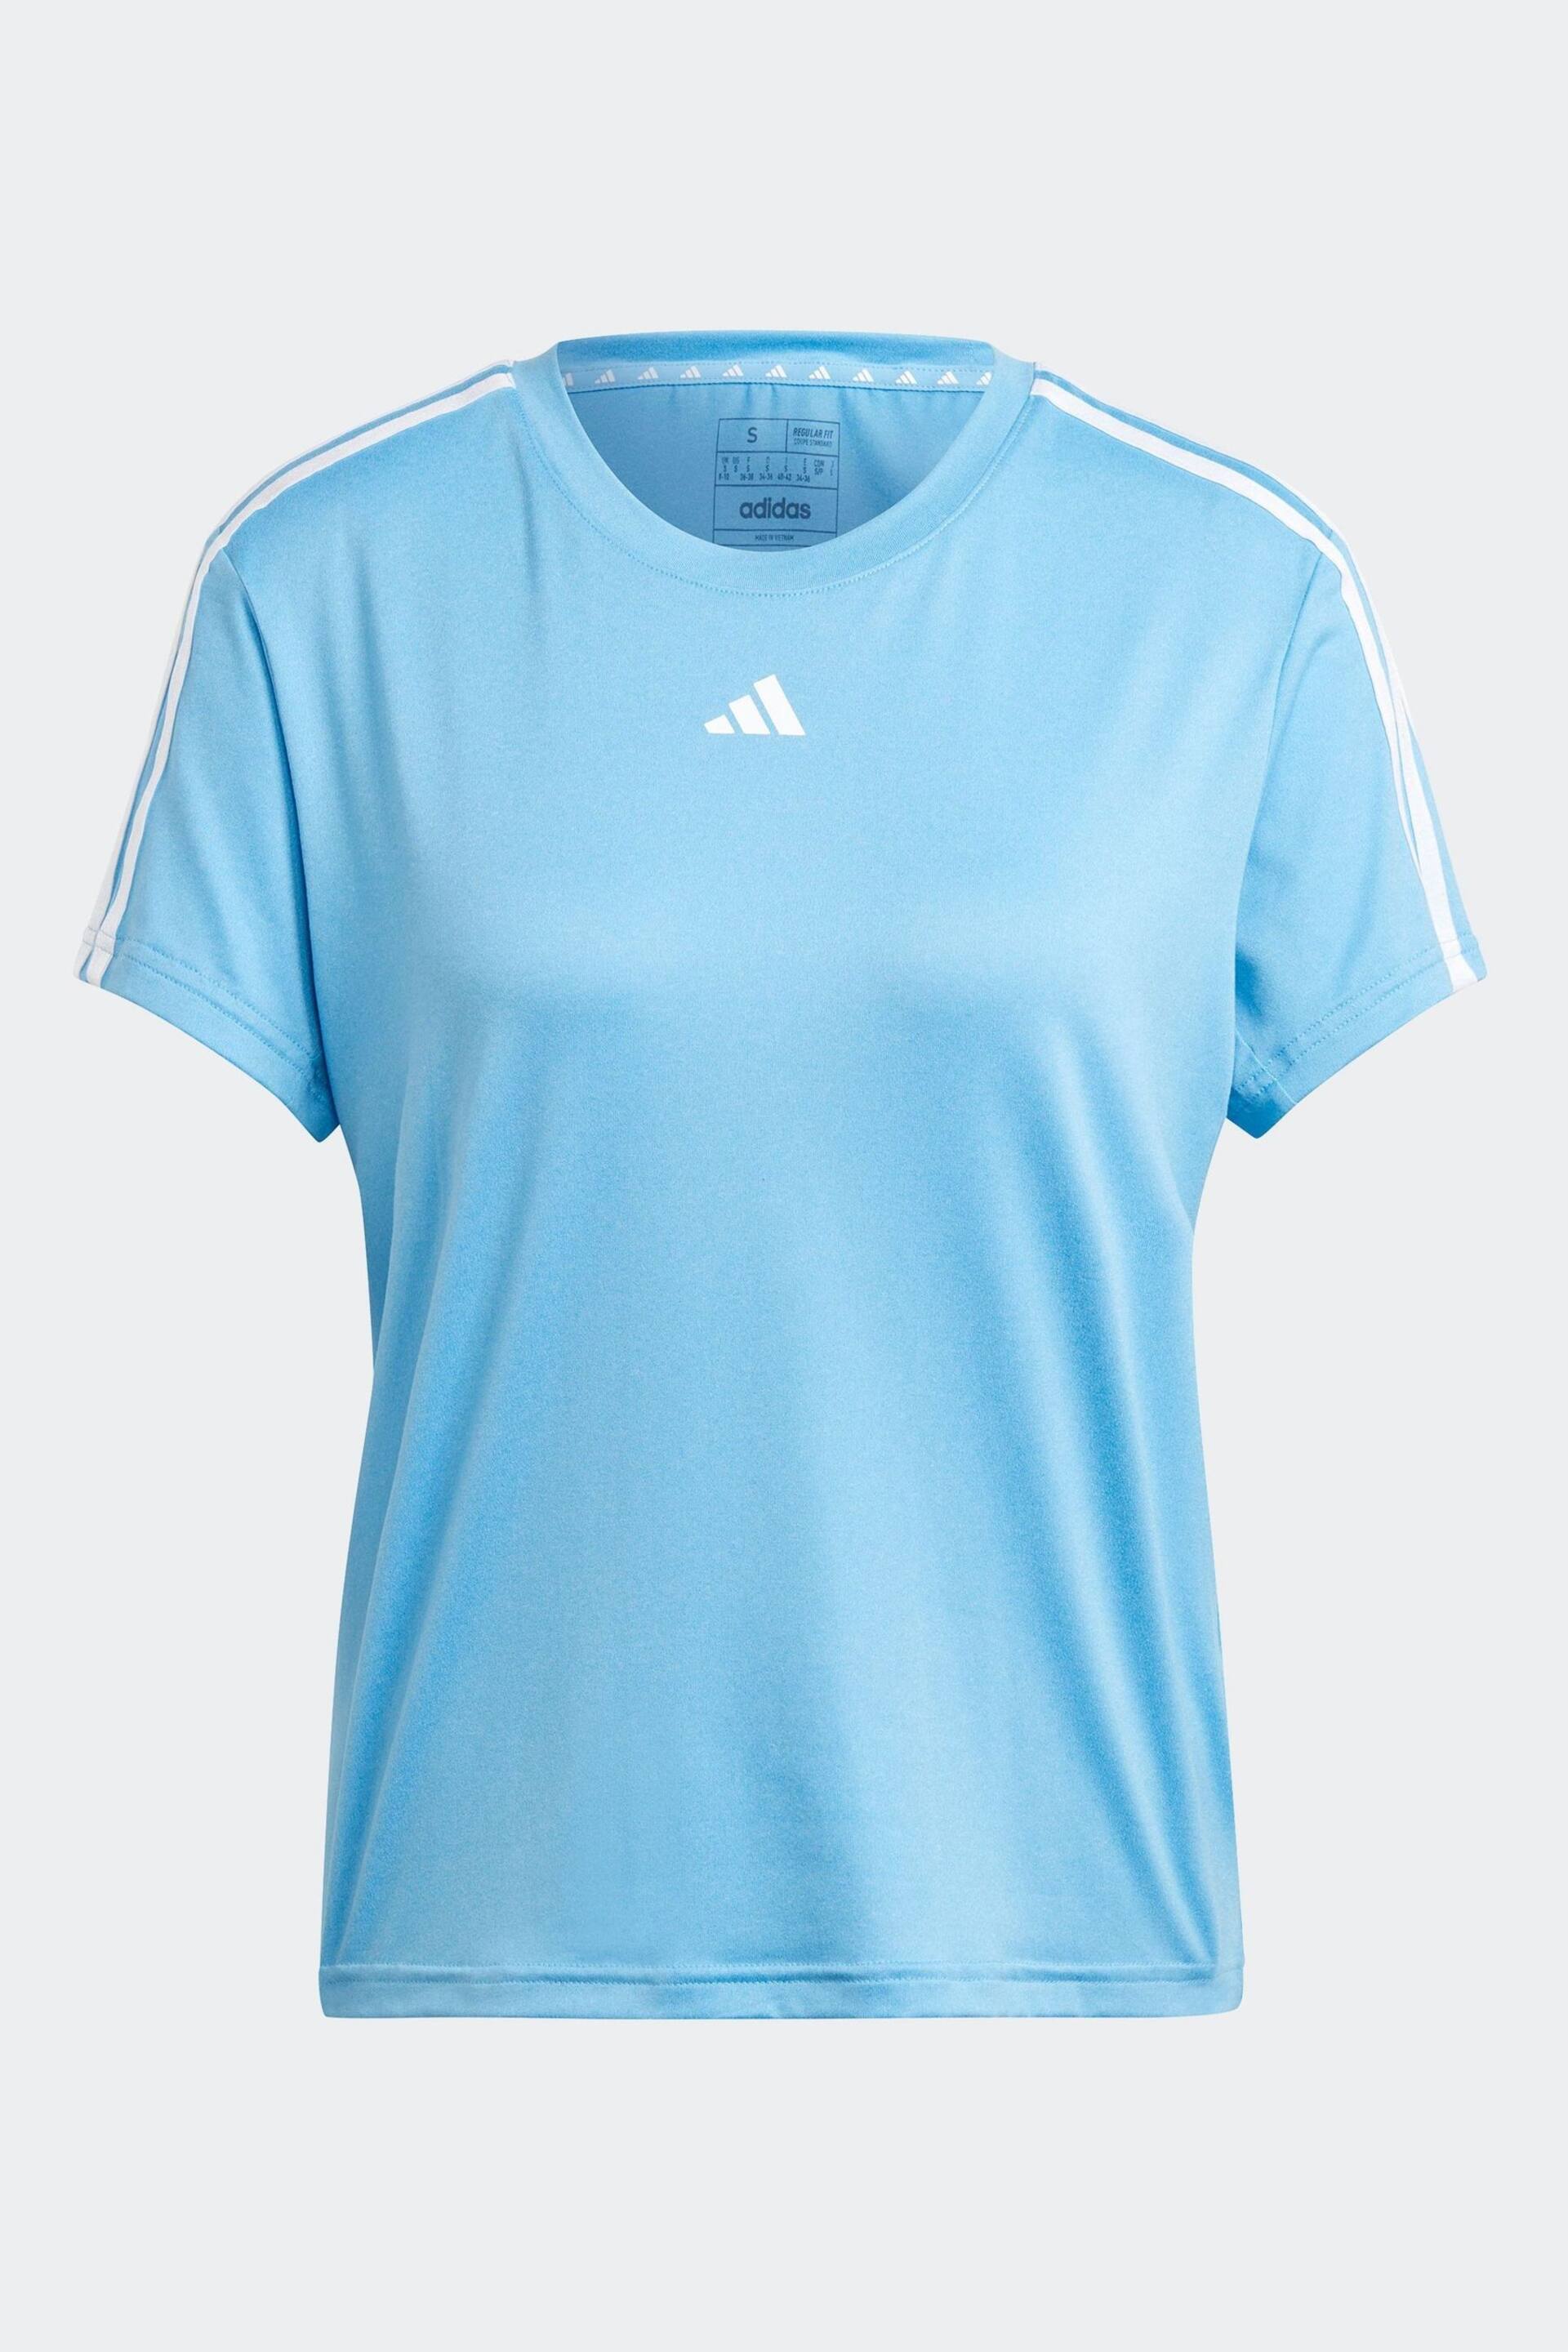 adidas Blue Aeroready Train Essentials 3-Stripes T-Shirt - Image 7 of 7